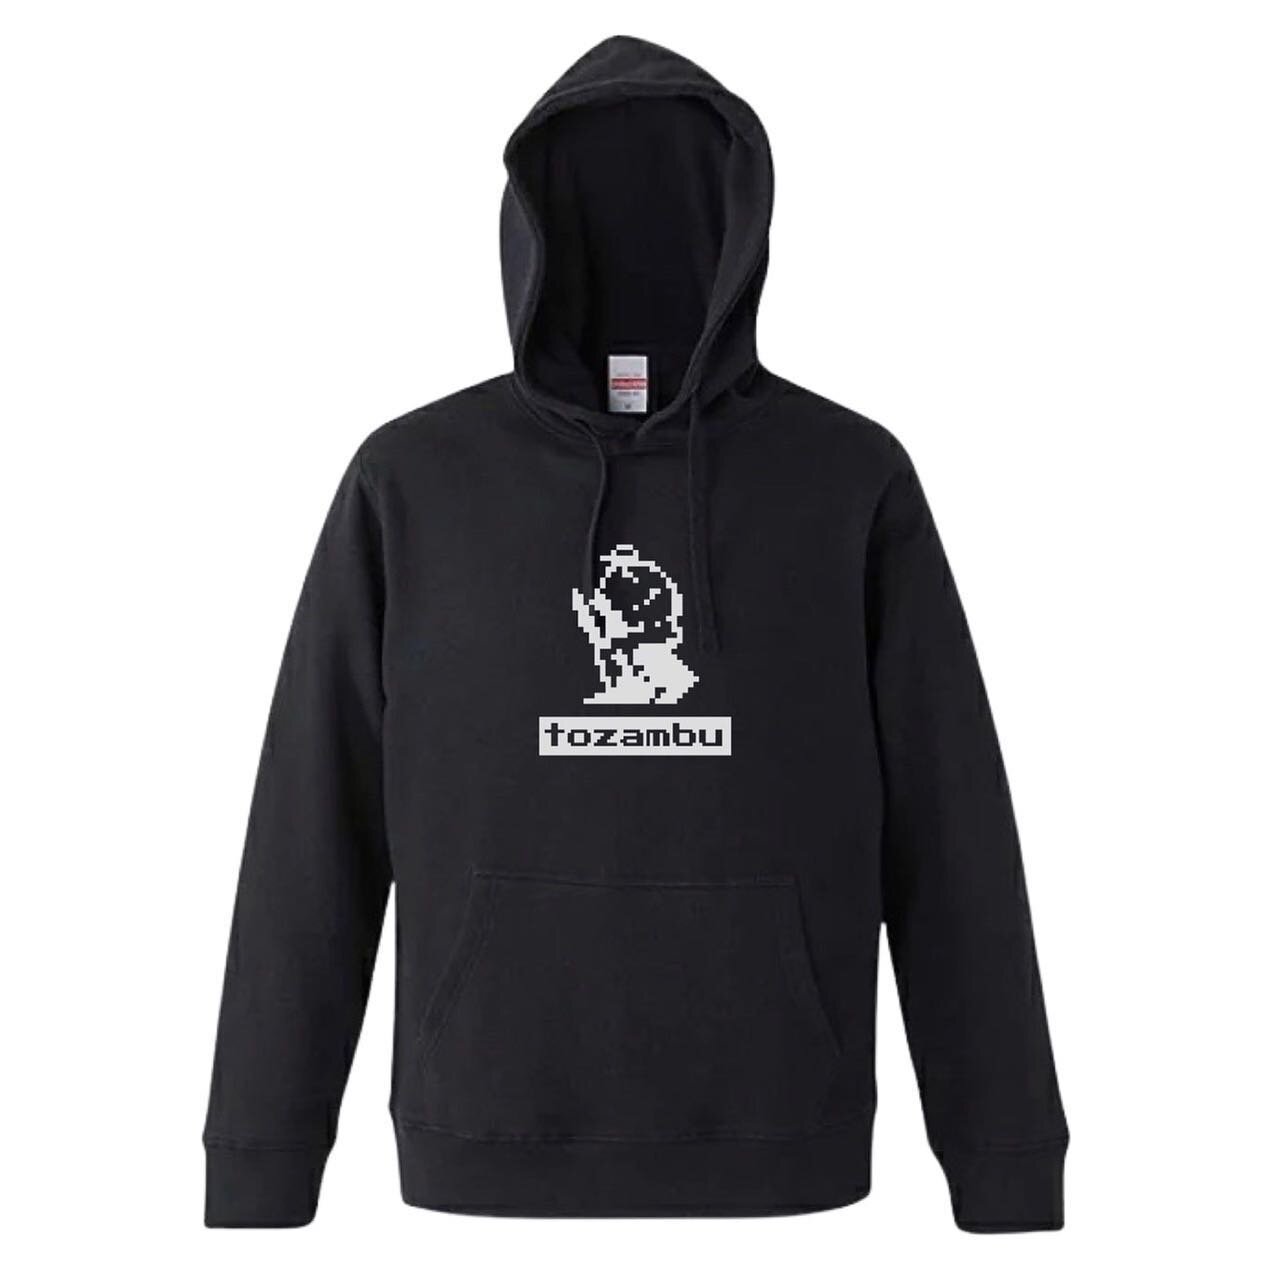 tozambu new hoodie
今回は初めてのパーカー！昨晩よりネットで販売スタートしました😎

tozambu パーカー 6,000円(MからXXLまで)

▷▶▷tozambuのホームページからオンラインストアページへGO!

#tozambu #goods #hoodie #8bit #design #パーカー #グッズ #バンド #band